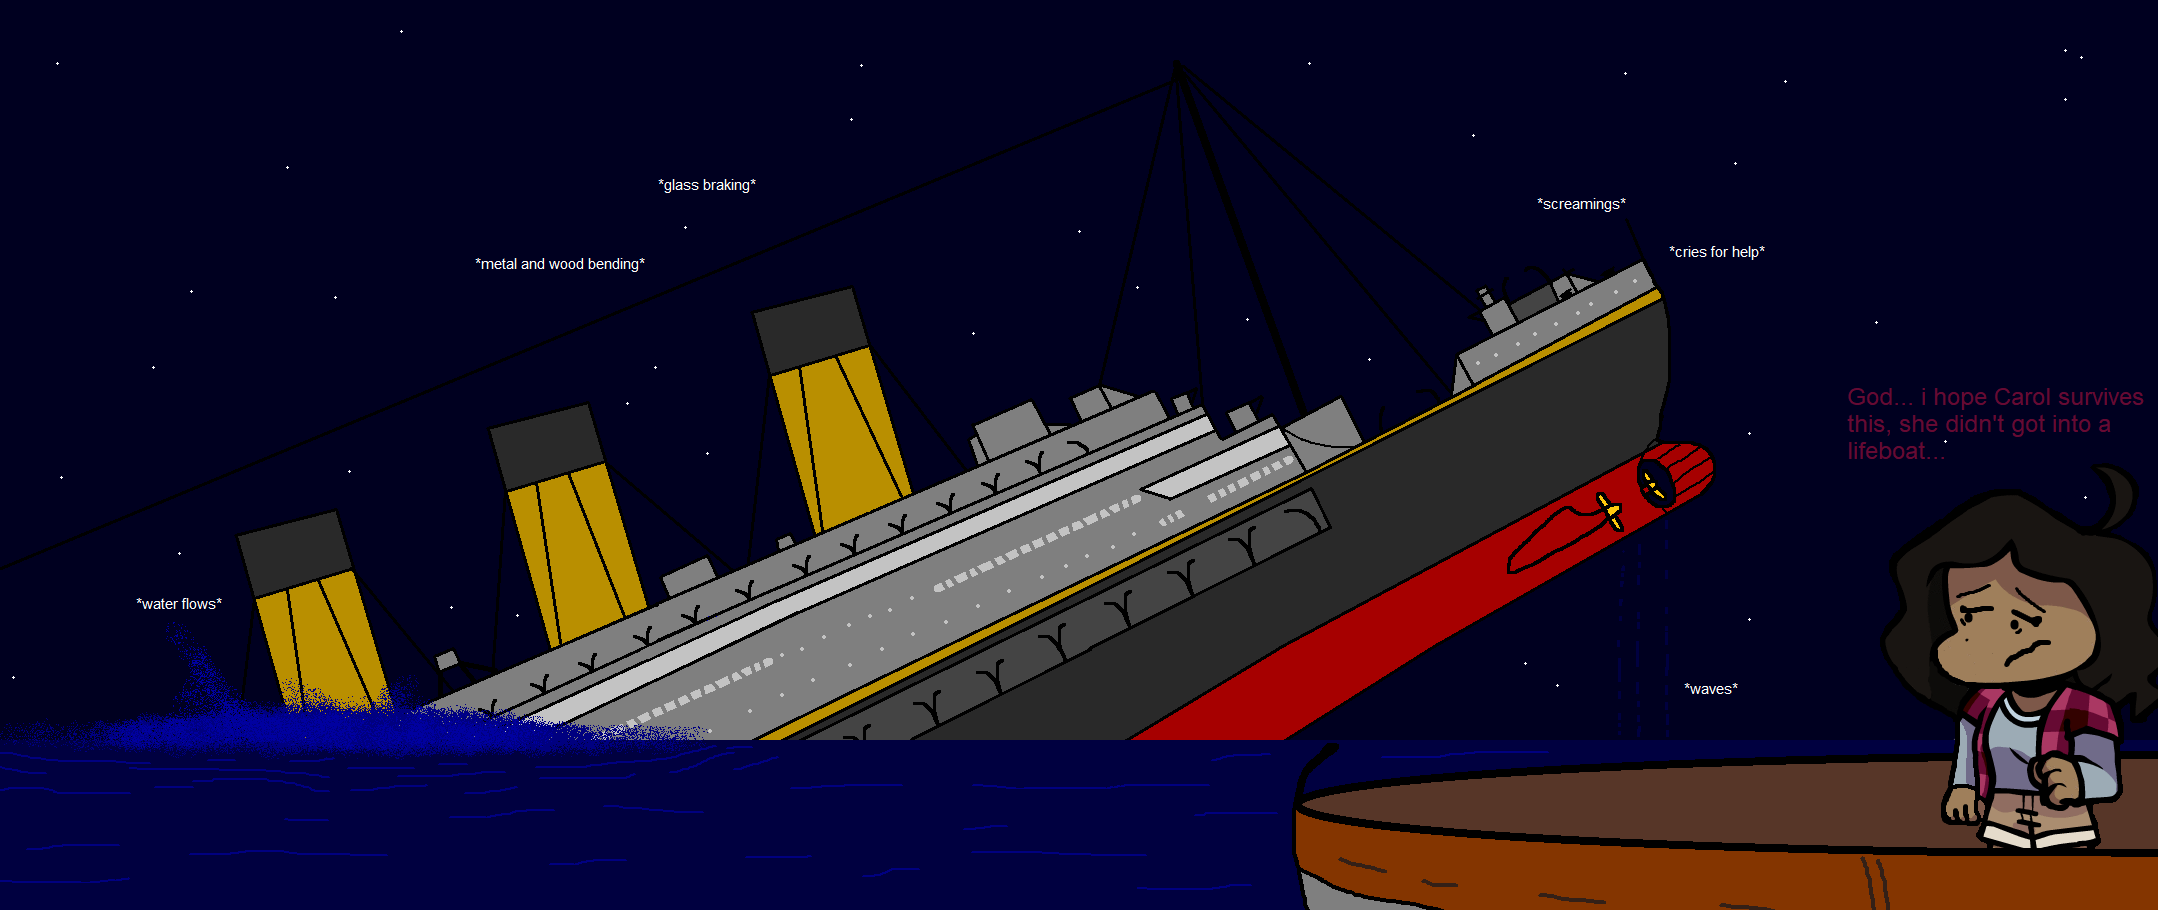 Sunday's POV on the Titanic II by D4ni3l001 on DeviantArt